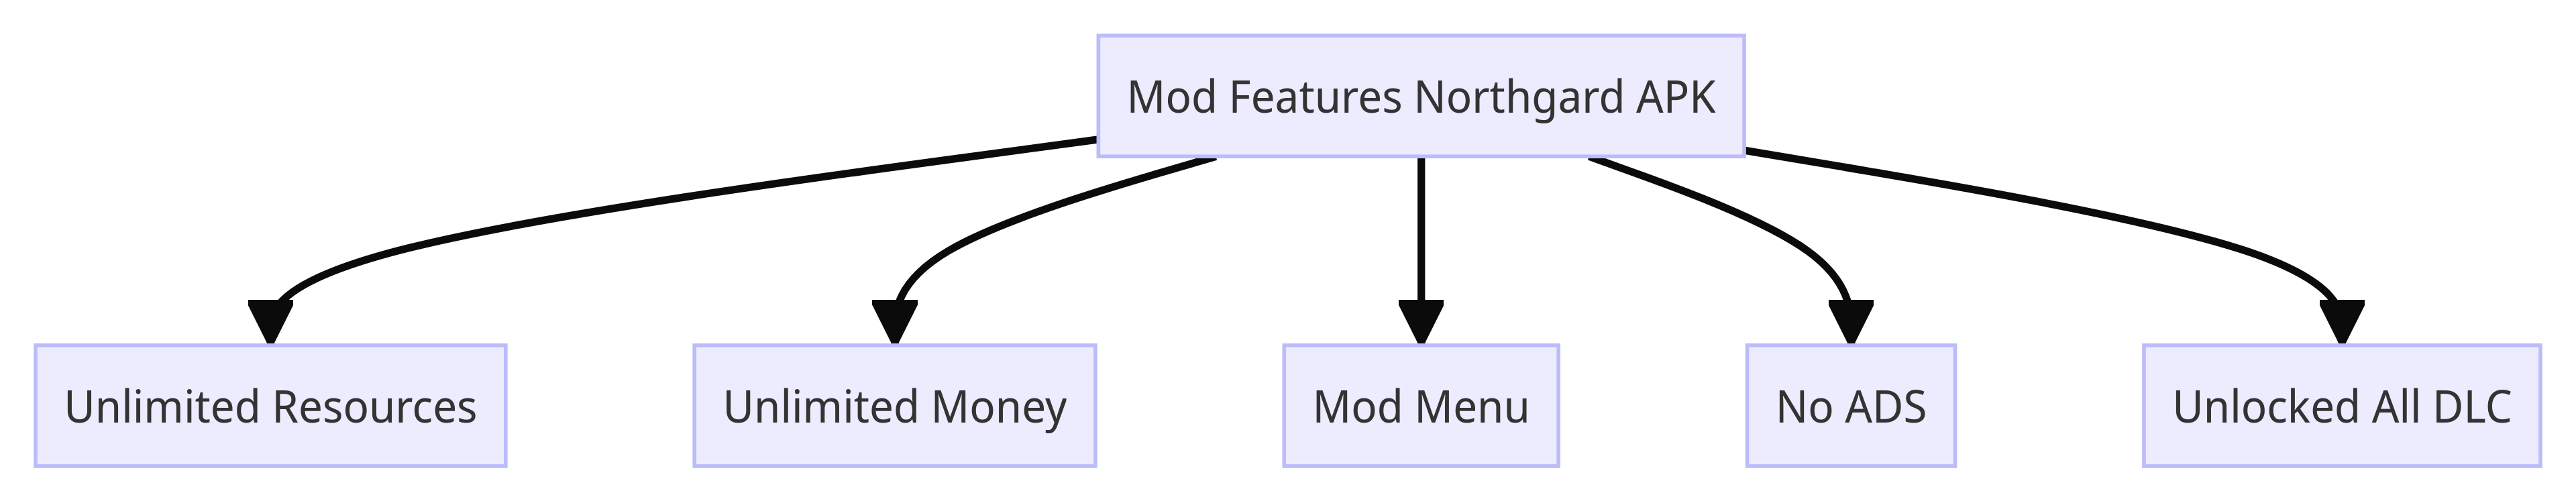 Mod Features Northgard APK